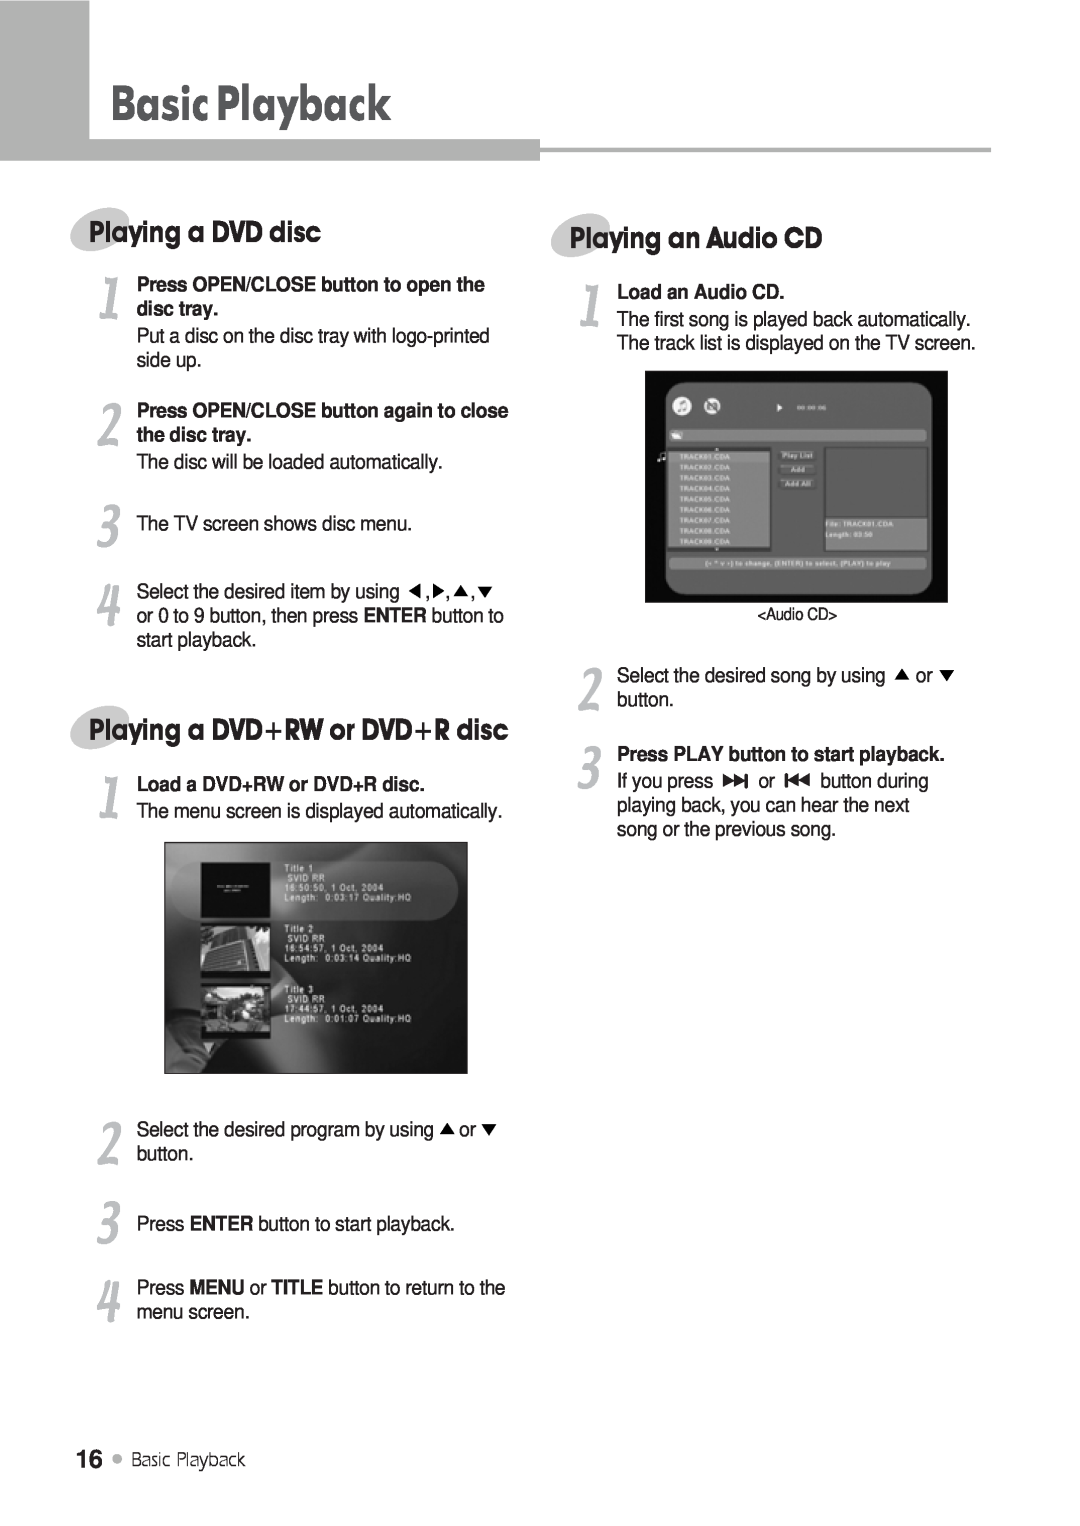 Kodak DRHD-120 manual BasicPlayback, Playing a DVD disc, Playing an Audio CD, Playing a DVD+RW or DVD+R disc, disc tray 